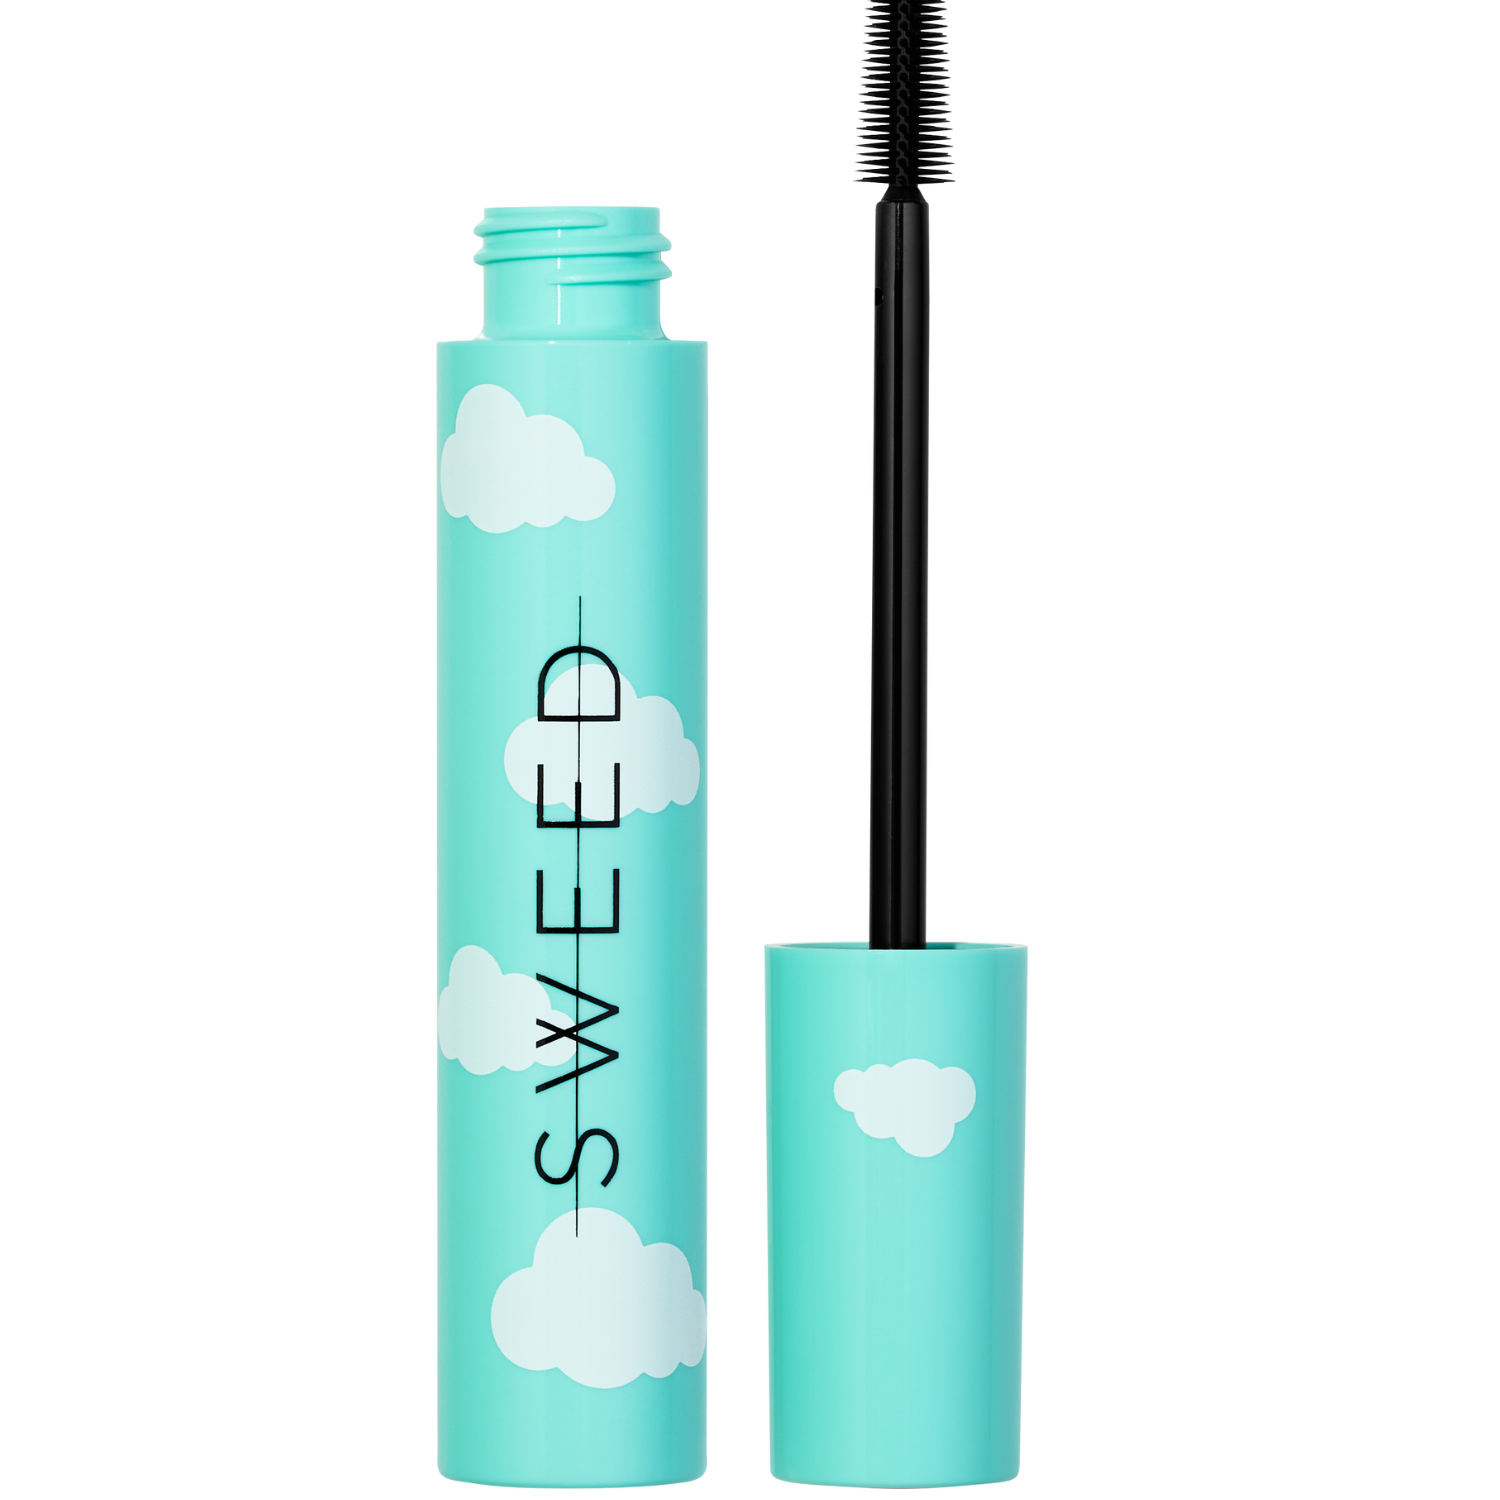 
  
  SWEED Cloud Mascara- LORDE beauty and cosmetics
  
